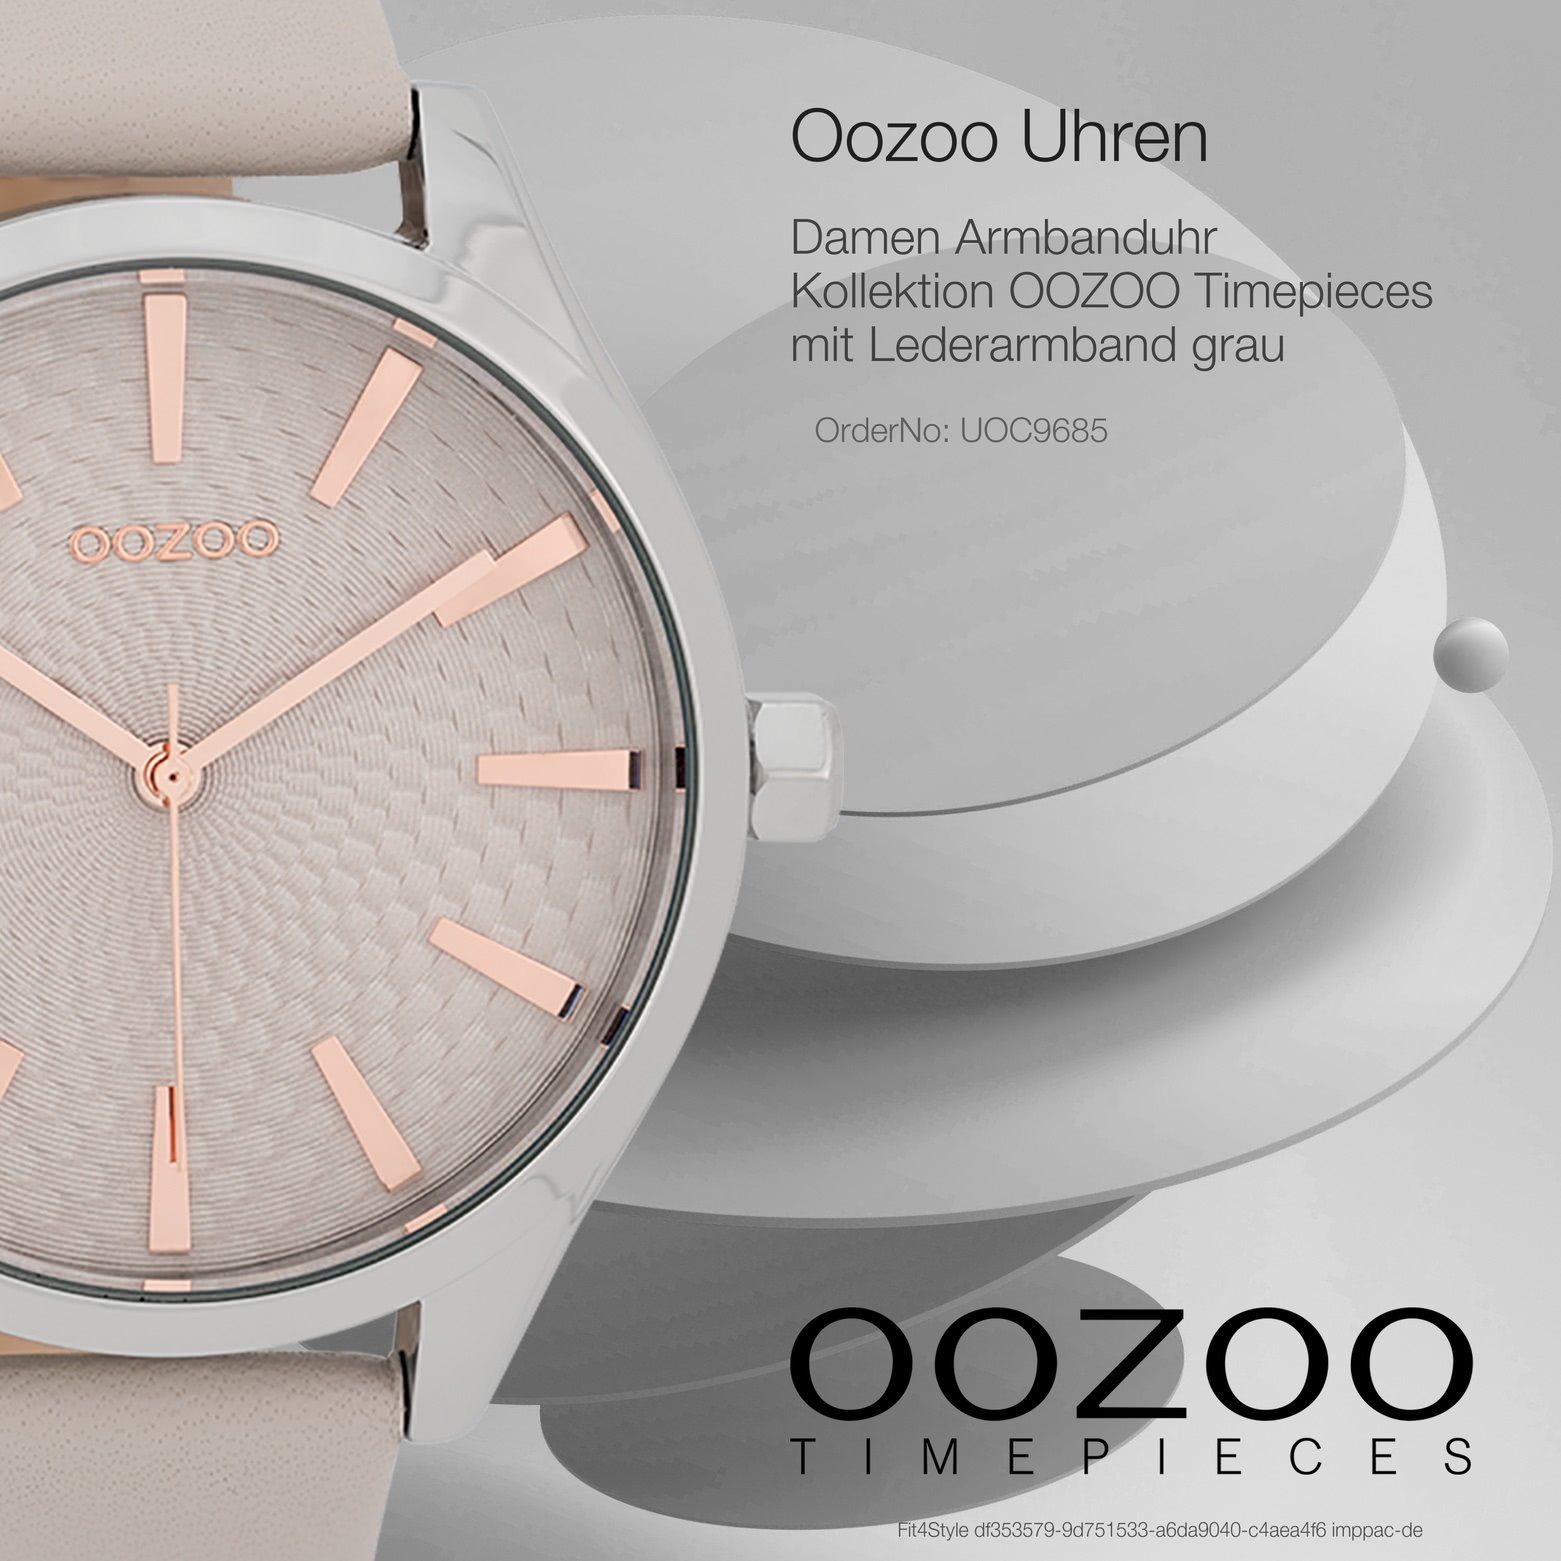 Timepieces, Damen Armbanduhr Lederarmband Fashion groß Quarzuhr grau, 42mm), OOZOO Damenuhr rund, (ca. Oozoo